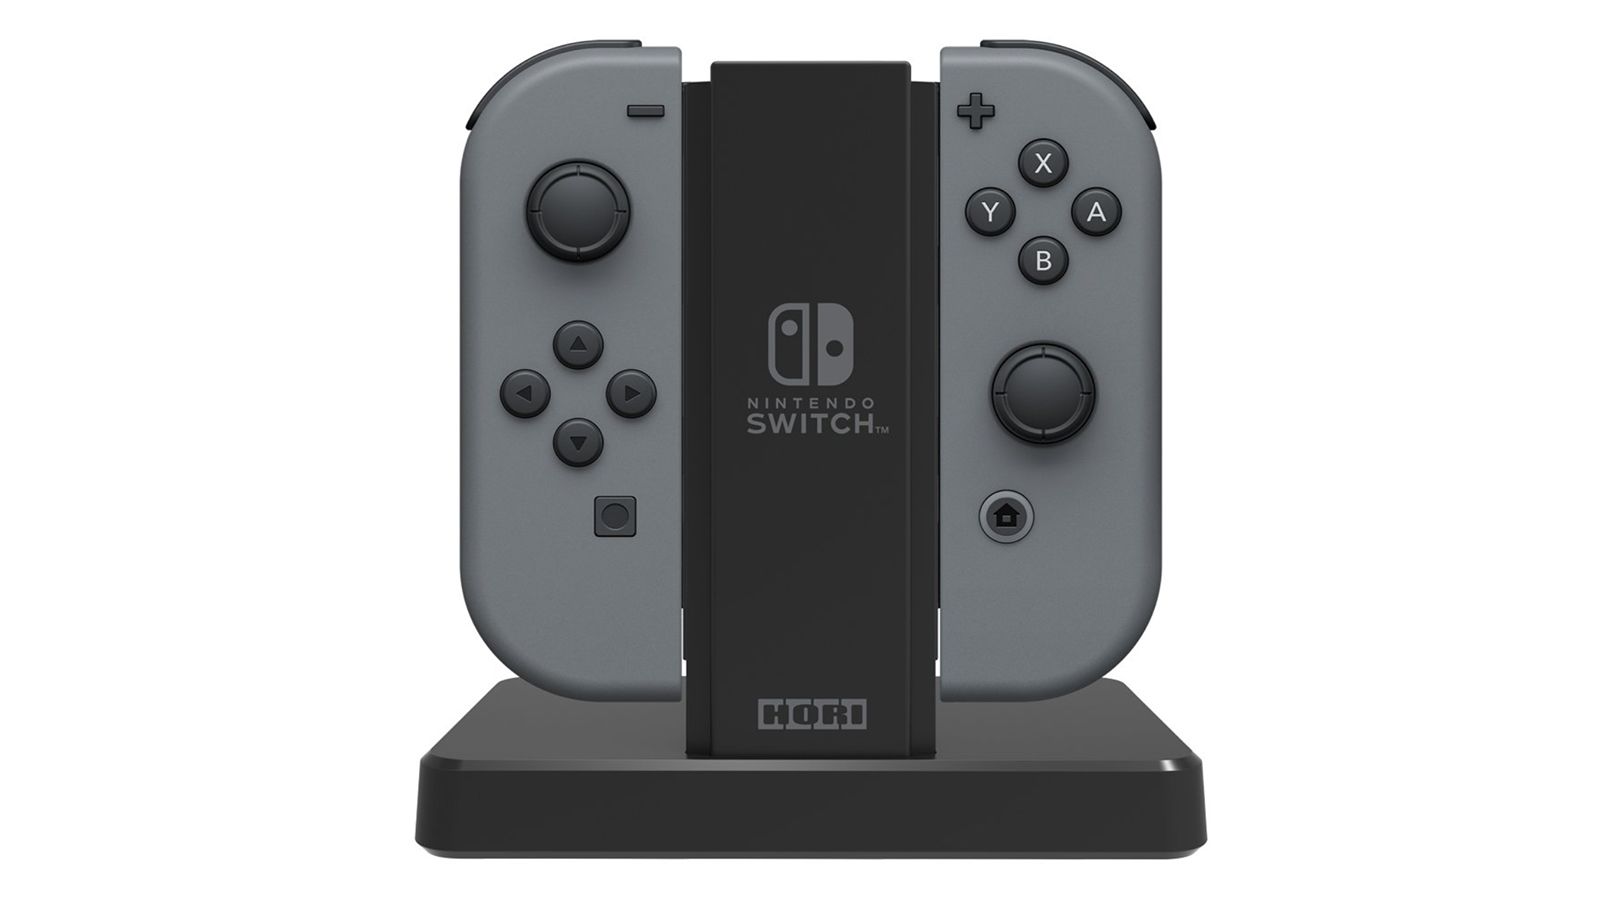 Nintendo Switch OLED Dock (with LAN Port) - White (Dock ONLY, Bulk